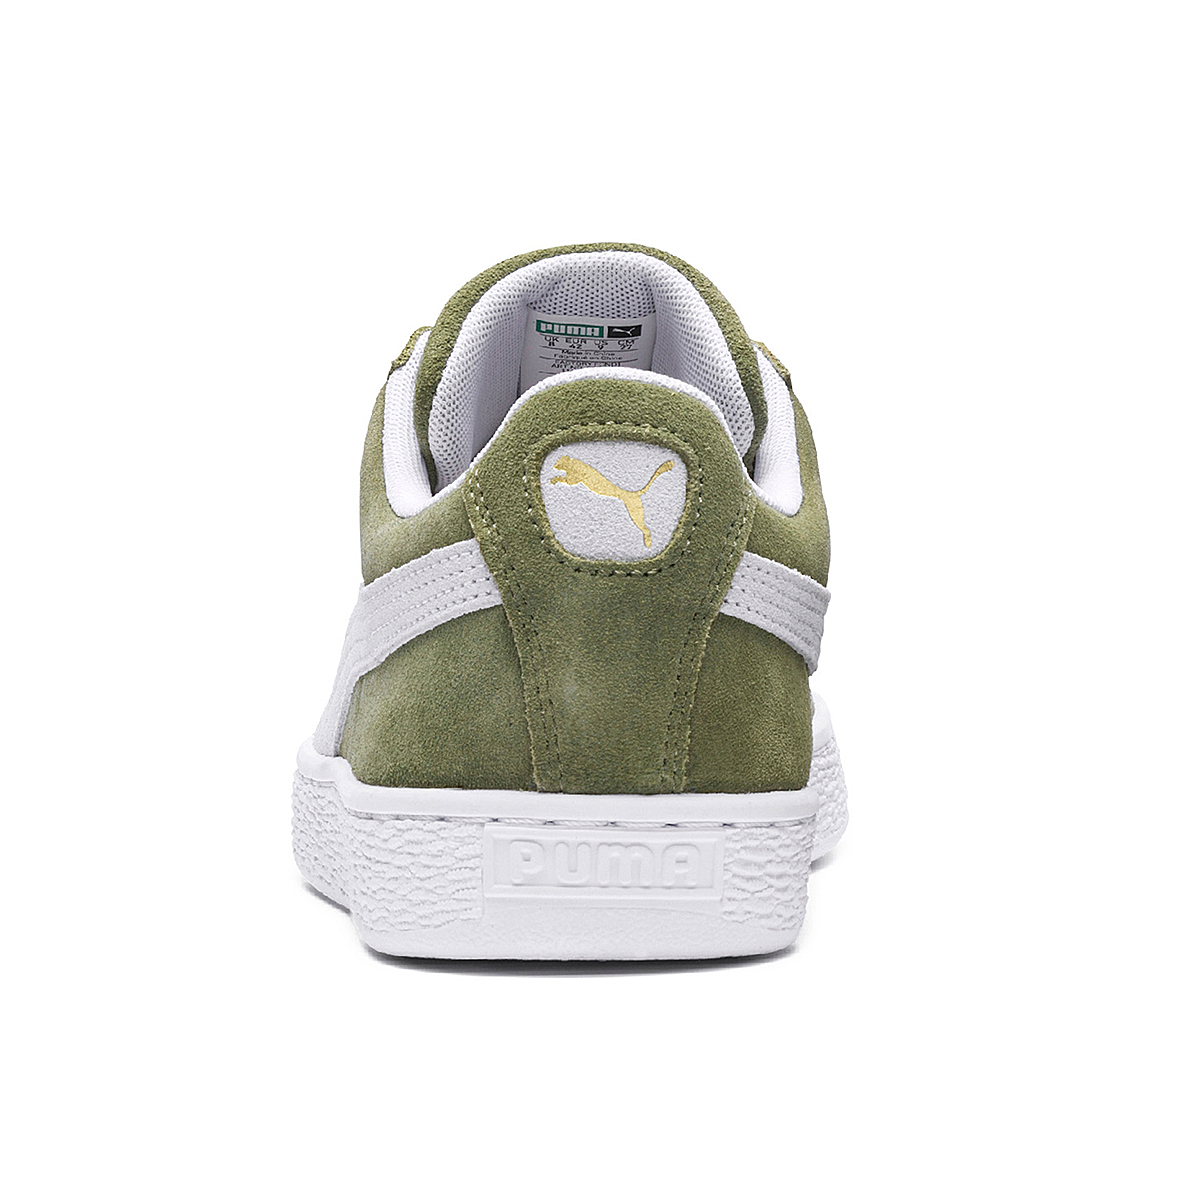 Puma Suede Classic Unisex Sneaker Low-Top grün 365347 14